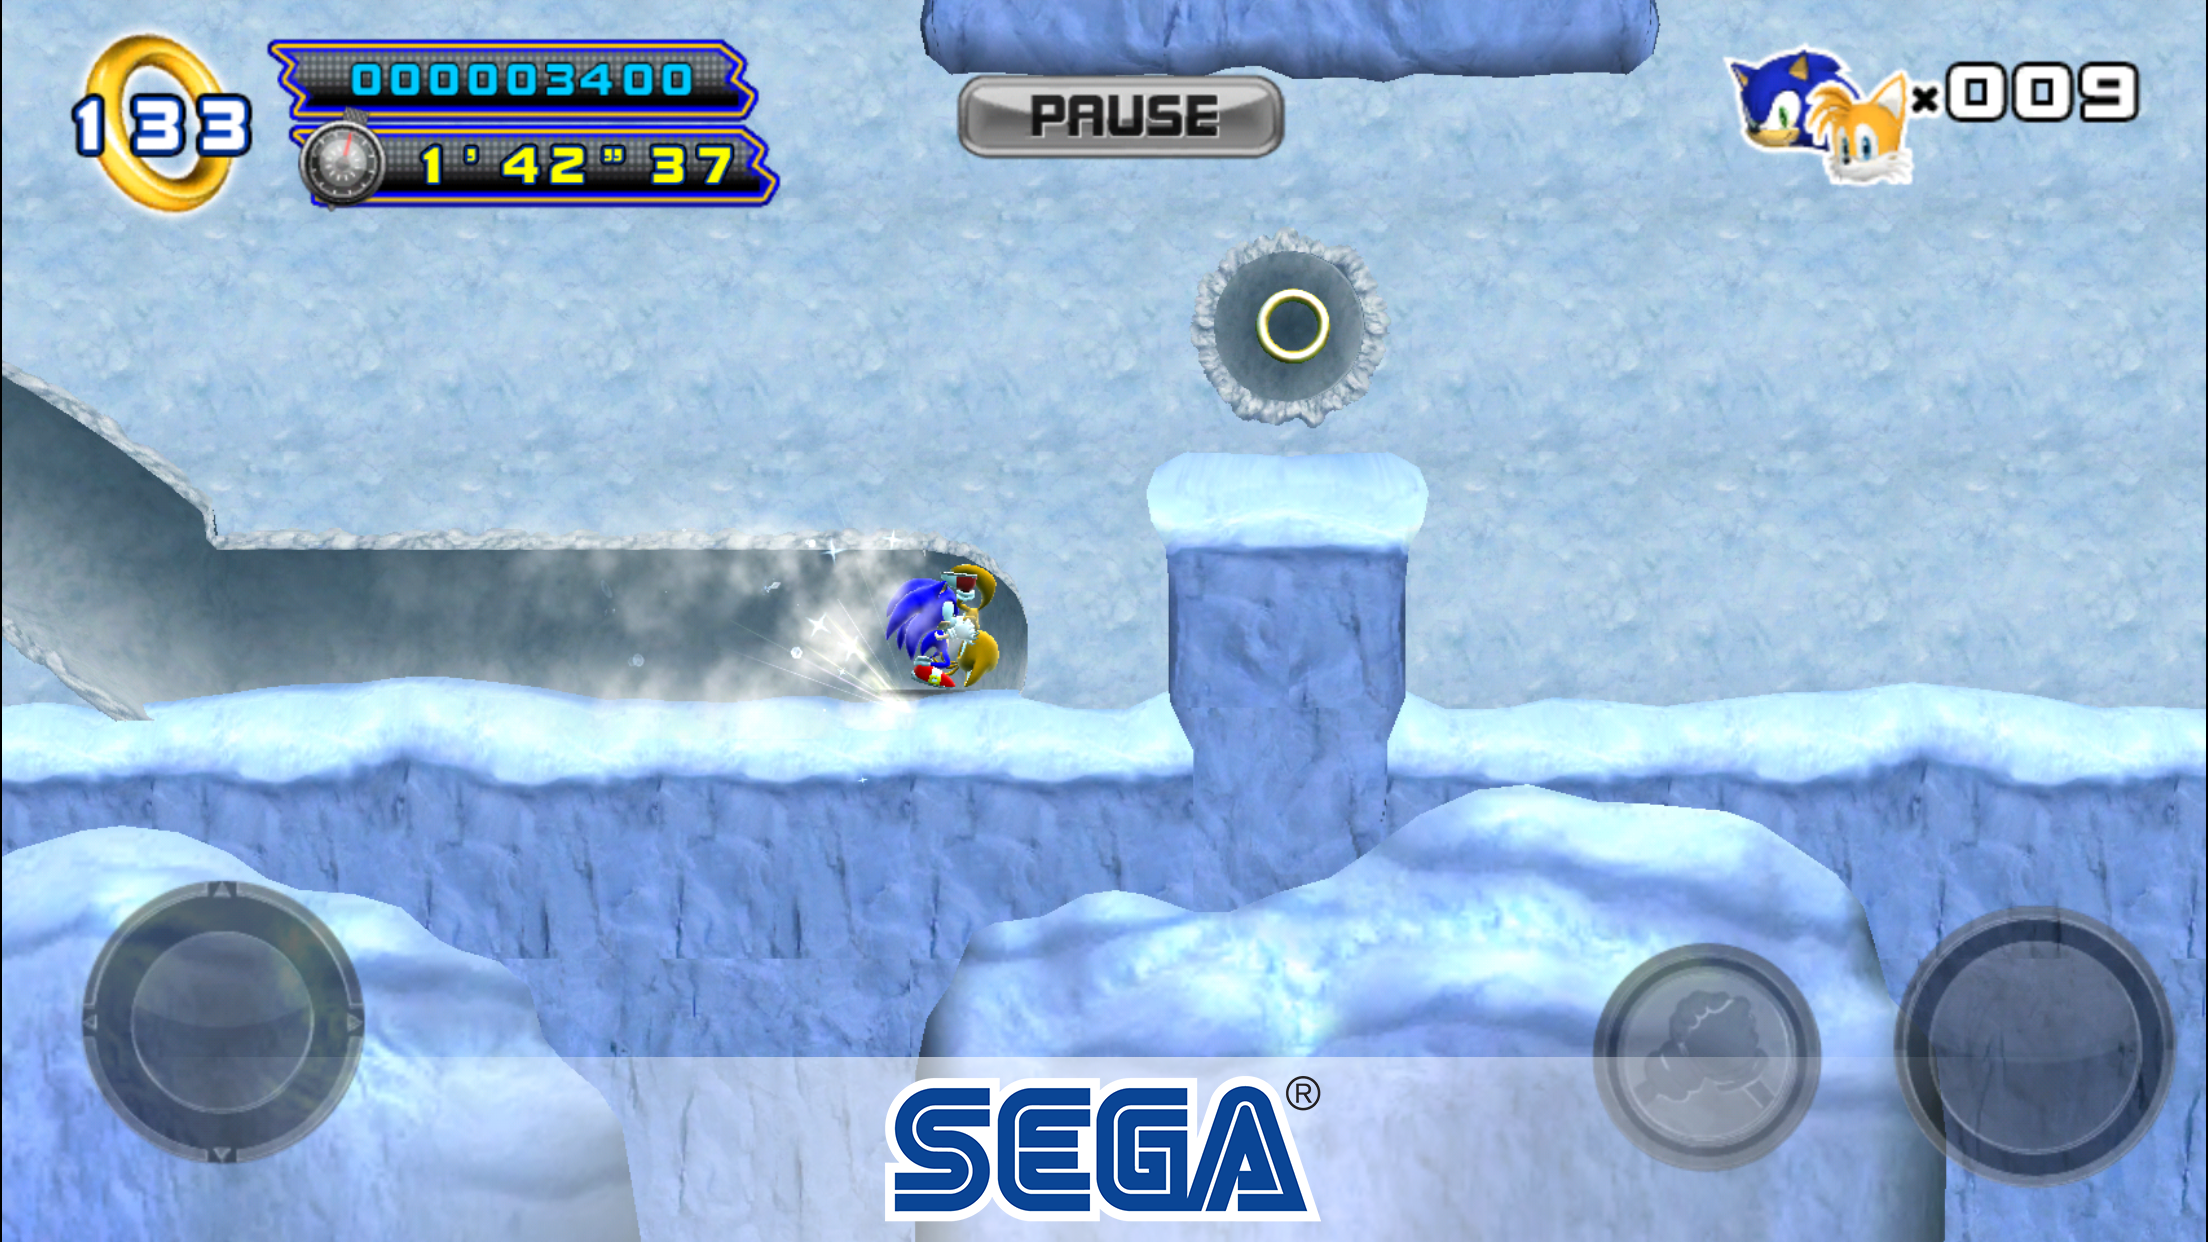 Sonic The Hedgehog 4 Ep II version mobile Android iOS télécharger apk  gratuitement-TapTap